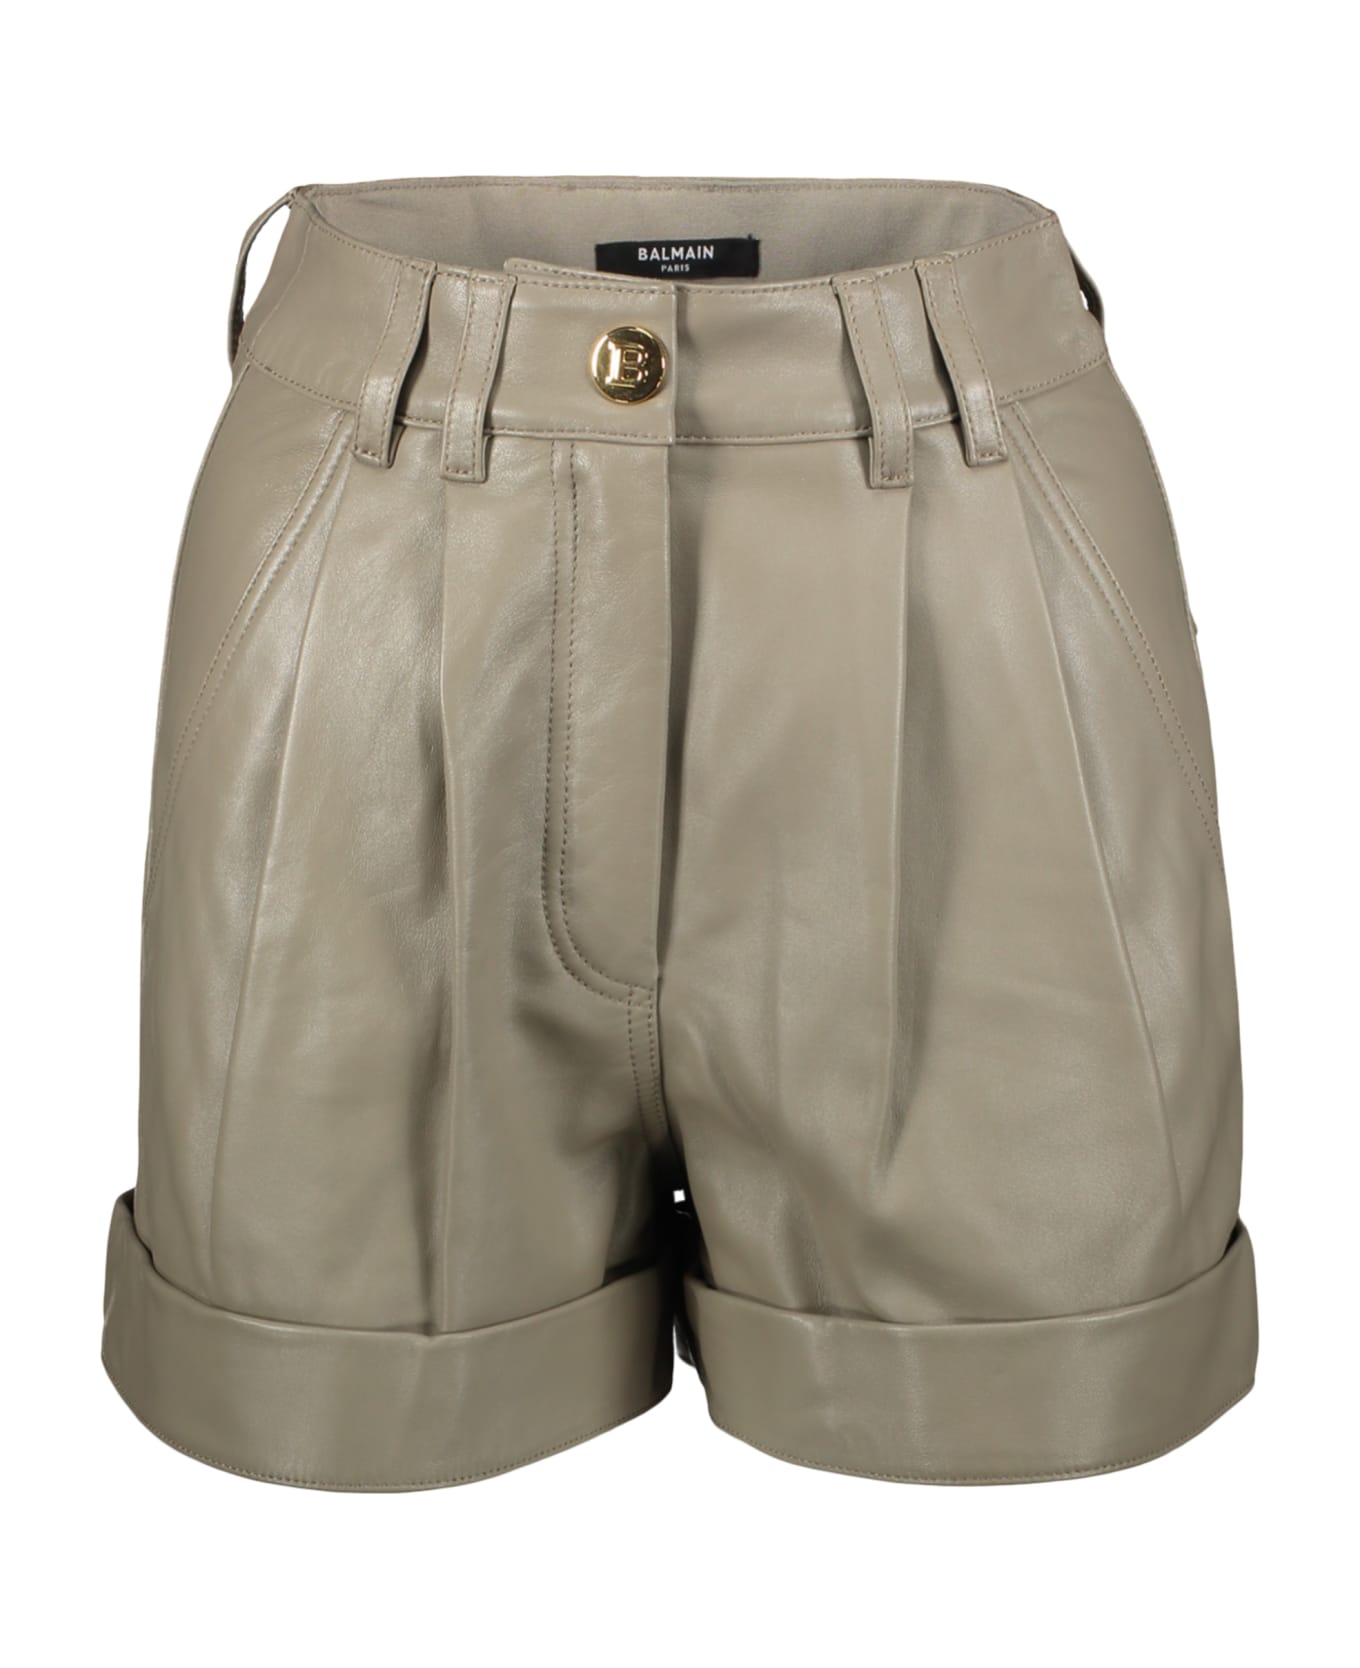 Balmain Leather Shorts - khaki